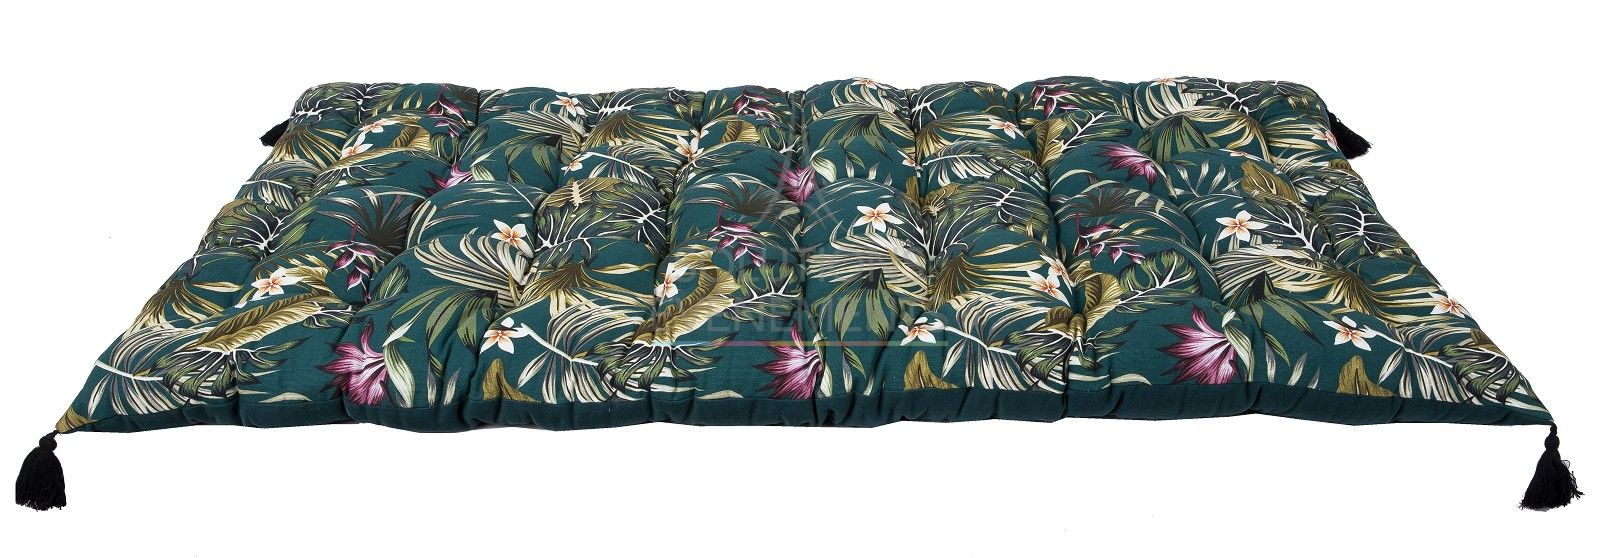 Rental of long cushion with jungle foliage 60 x 120 cm